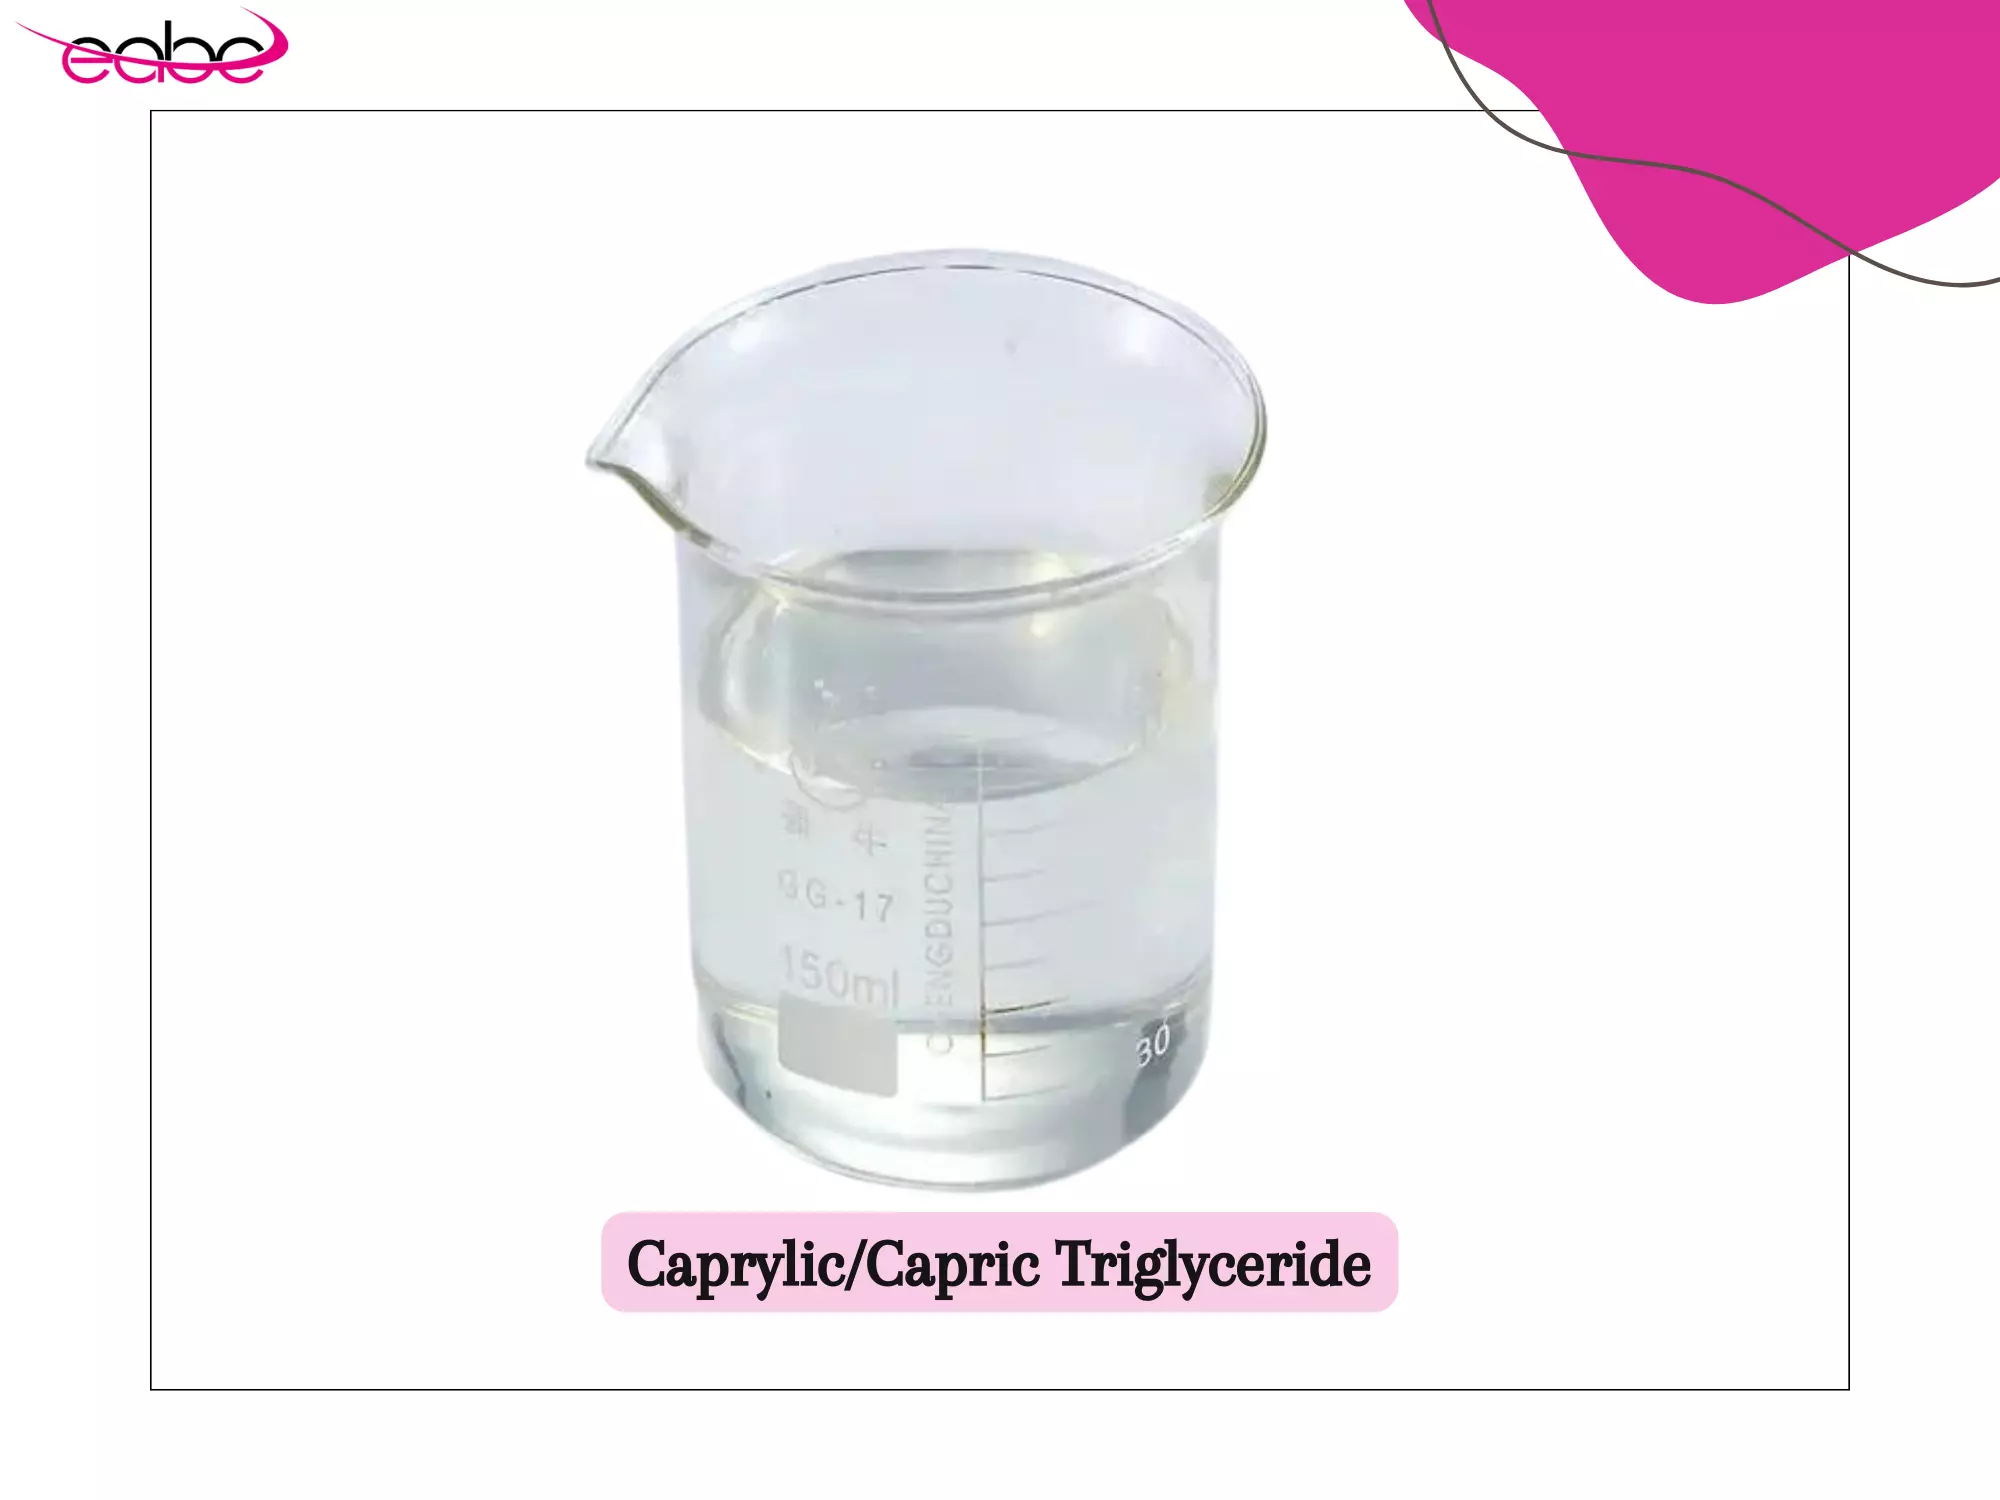 Caprylic/Capric Triglyceride